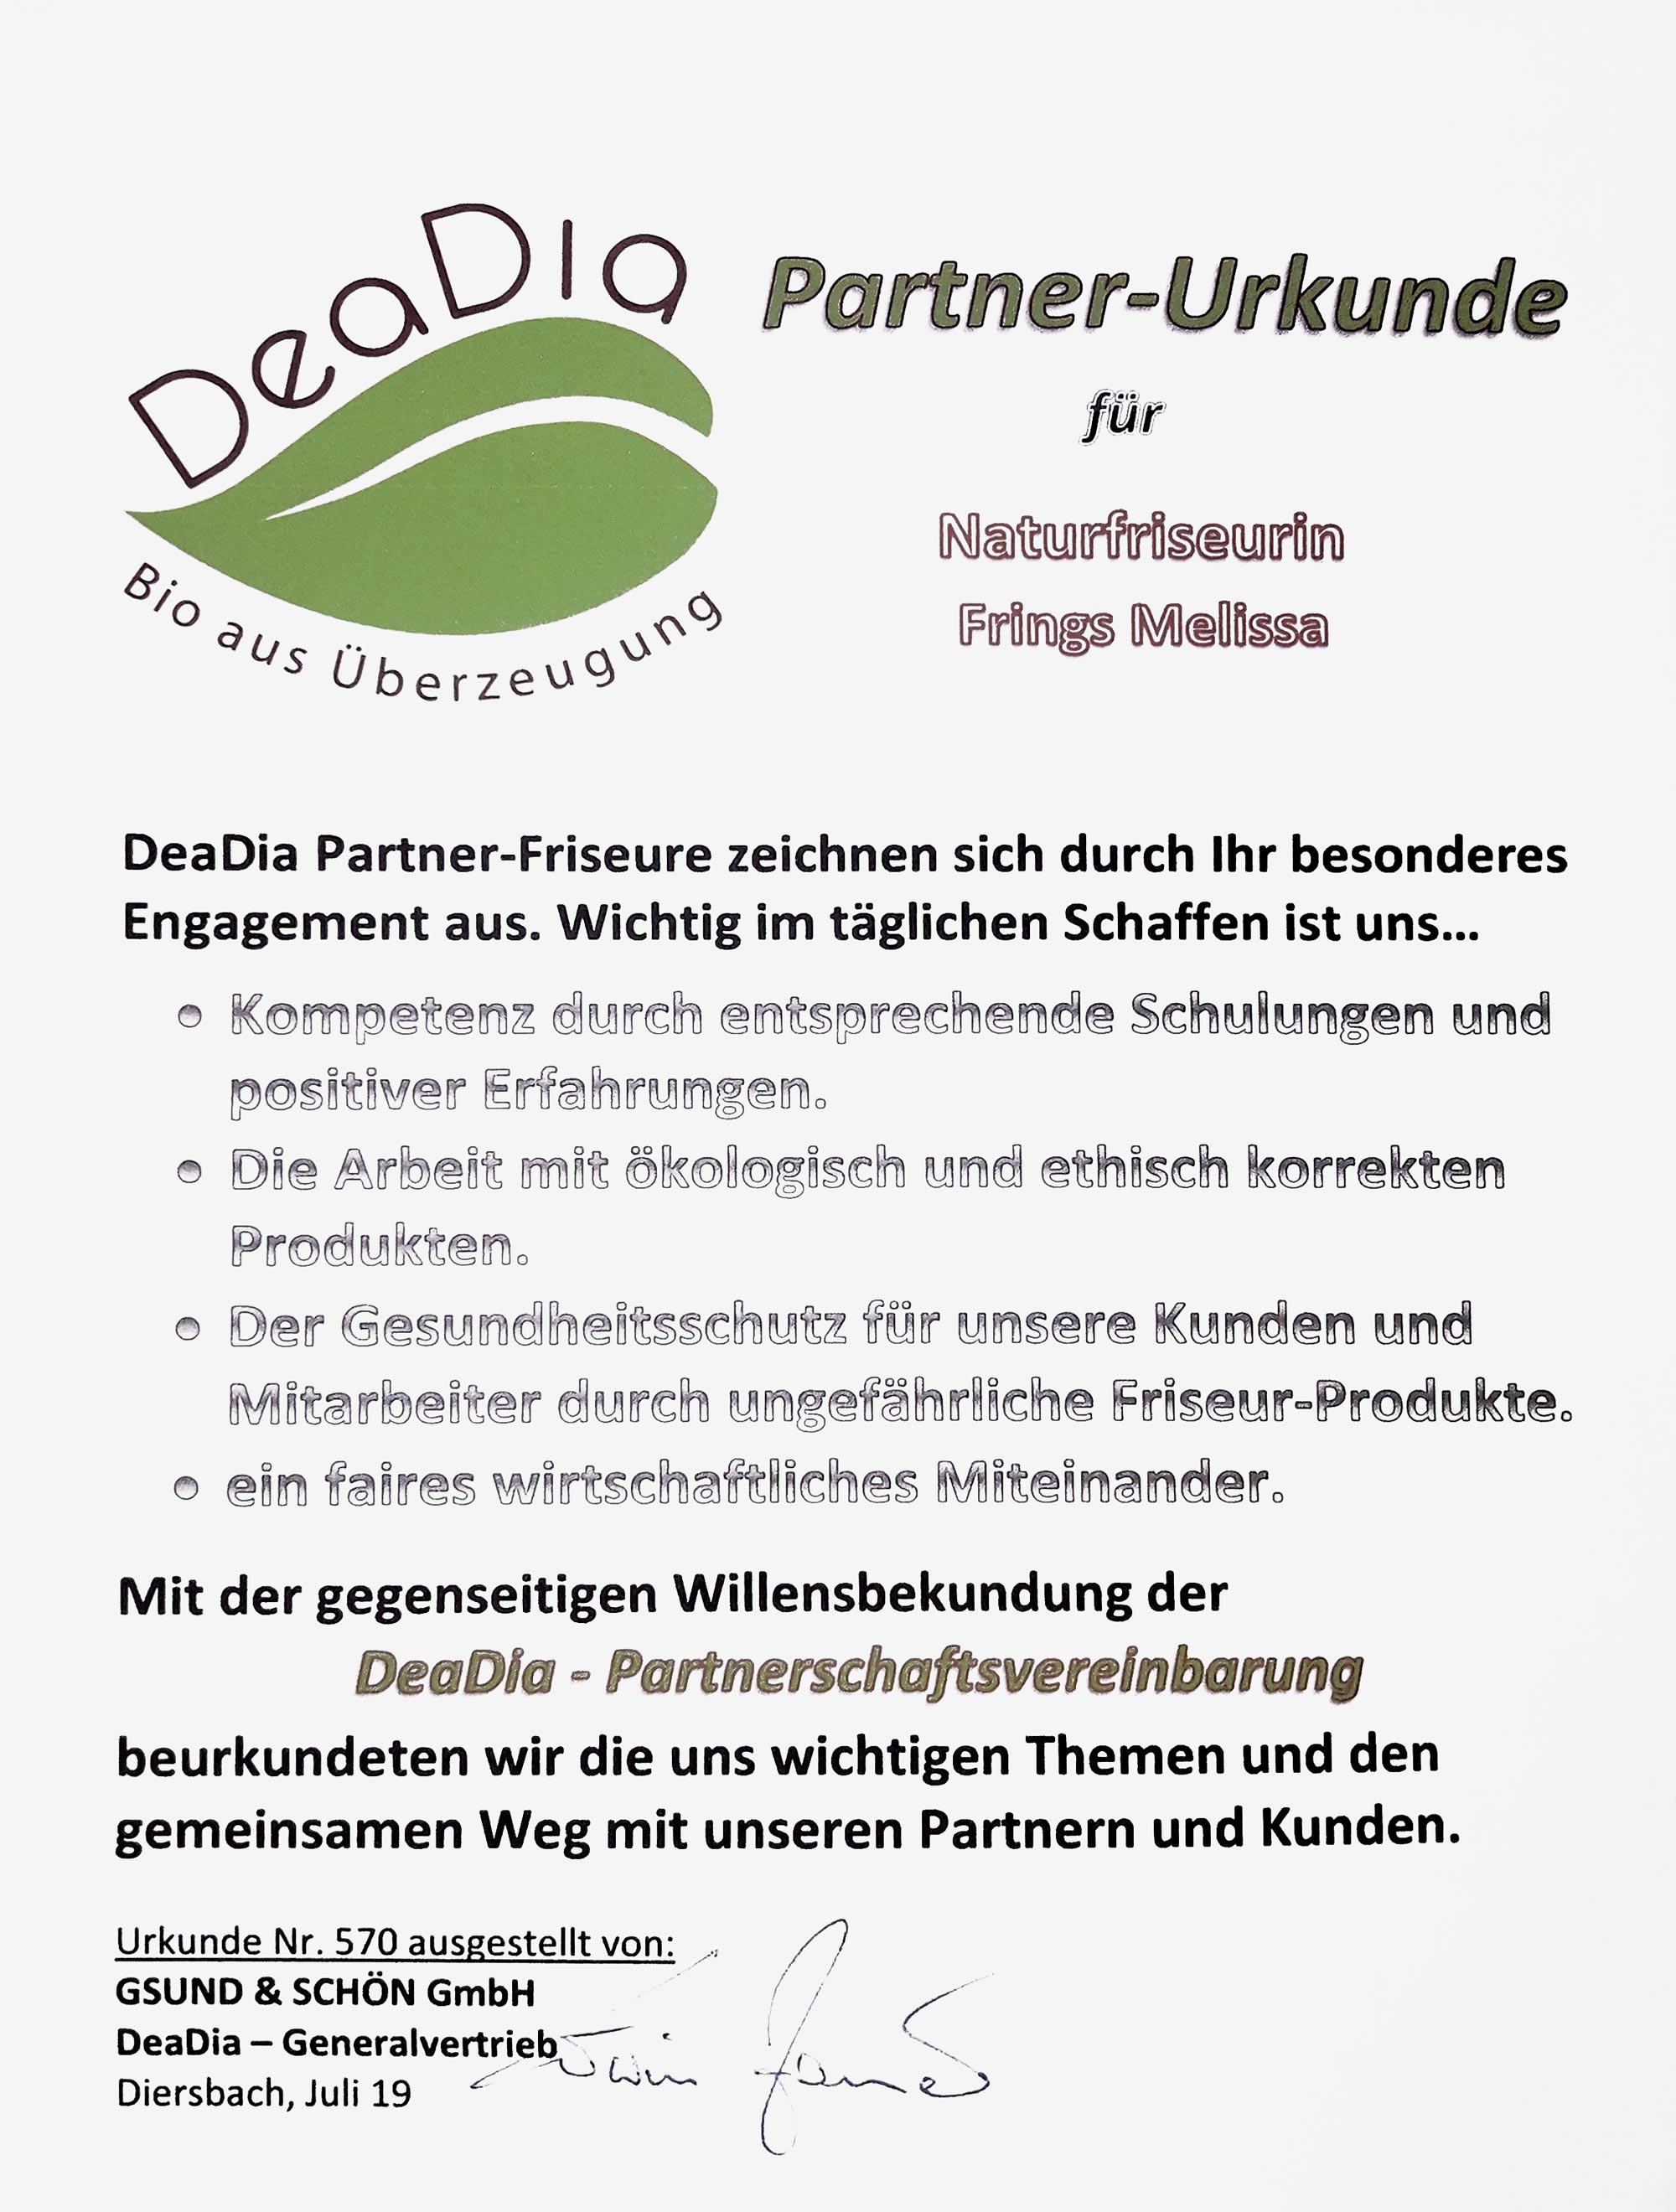 DeaDia Partner Urkunde - Naturfriseurin Melissa Frings Aachen